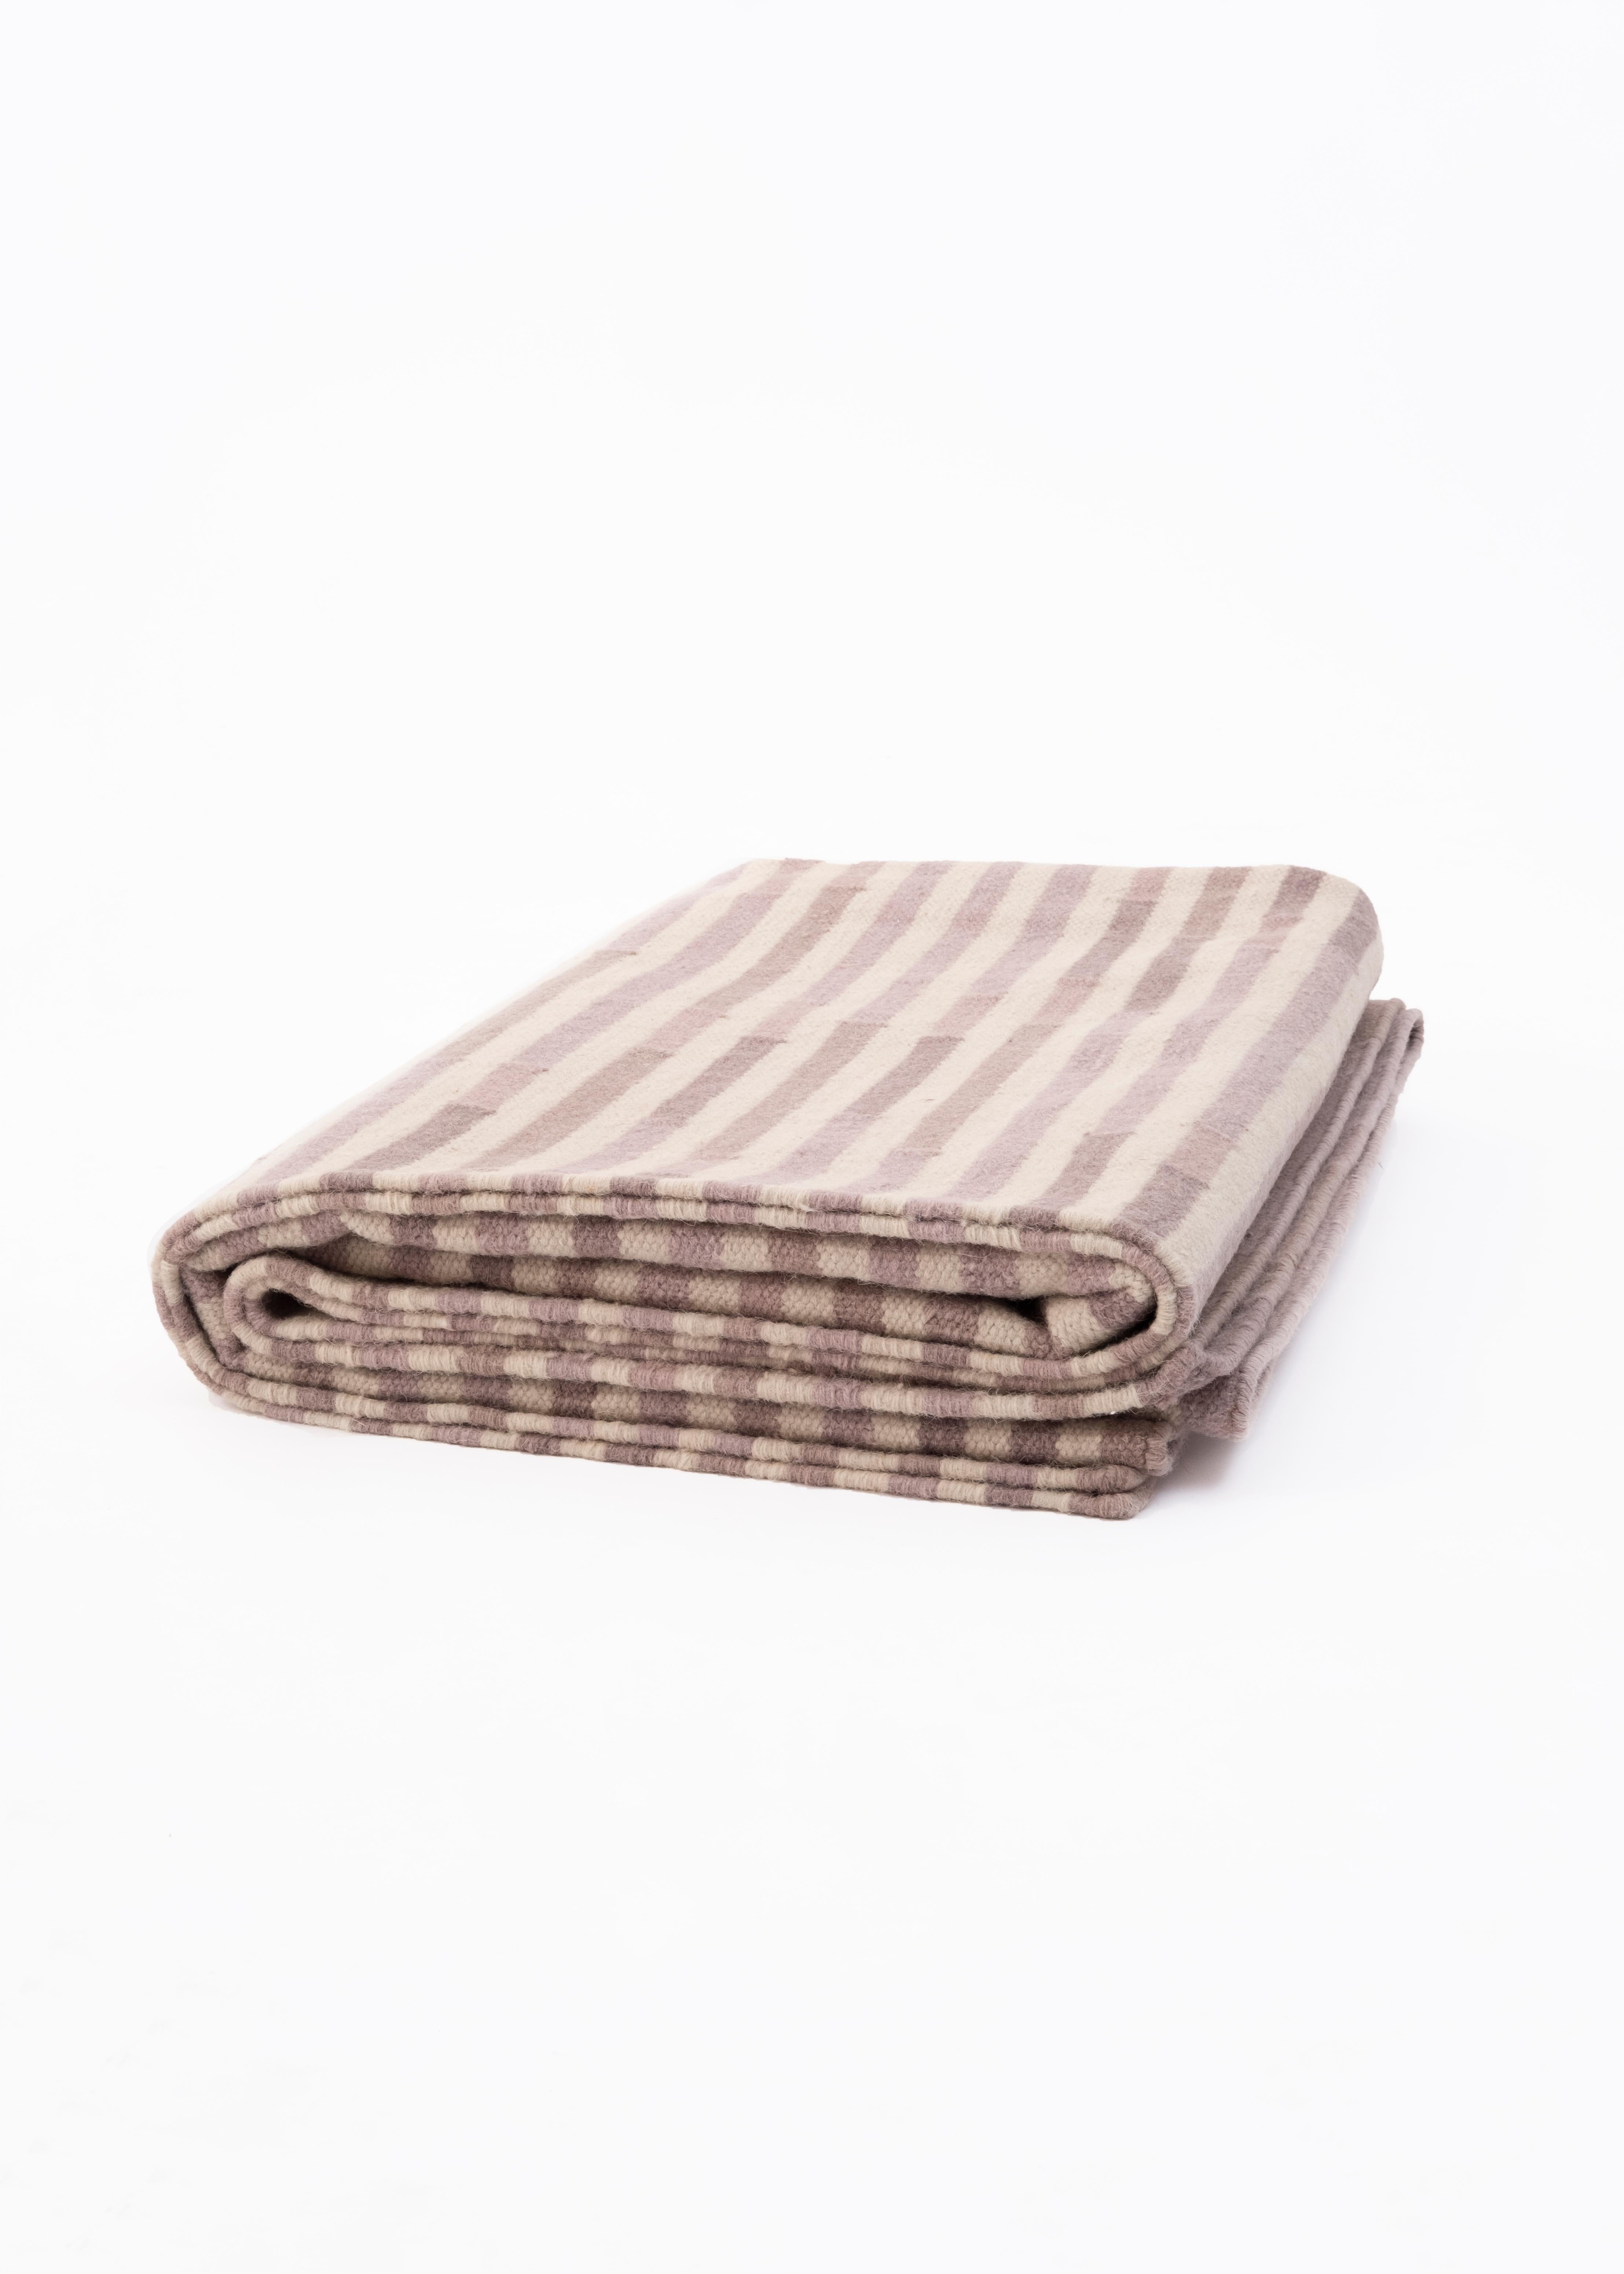 Tempo Uno - Warm - Design Summer Kilim Rug Contemporary Carpet Wool Cotton Flat In New Condition For Sale In MILANO, ML